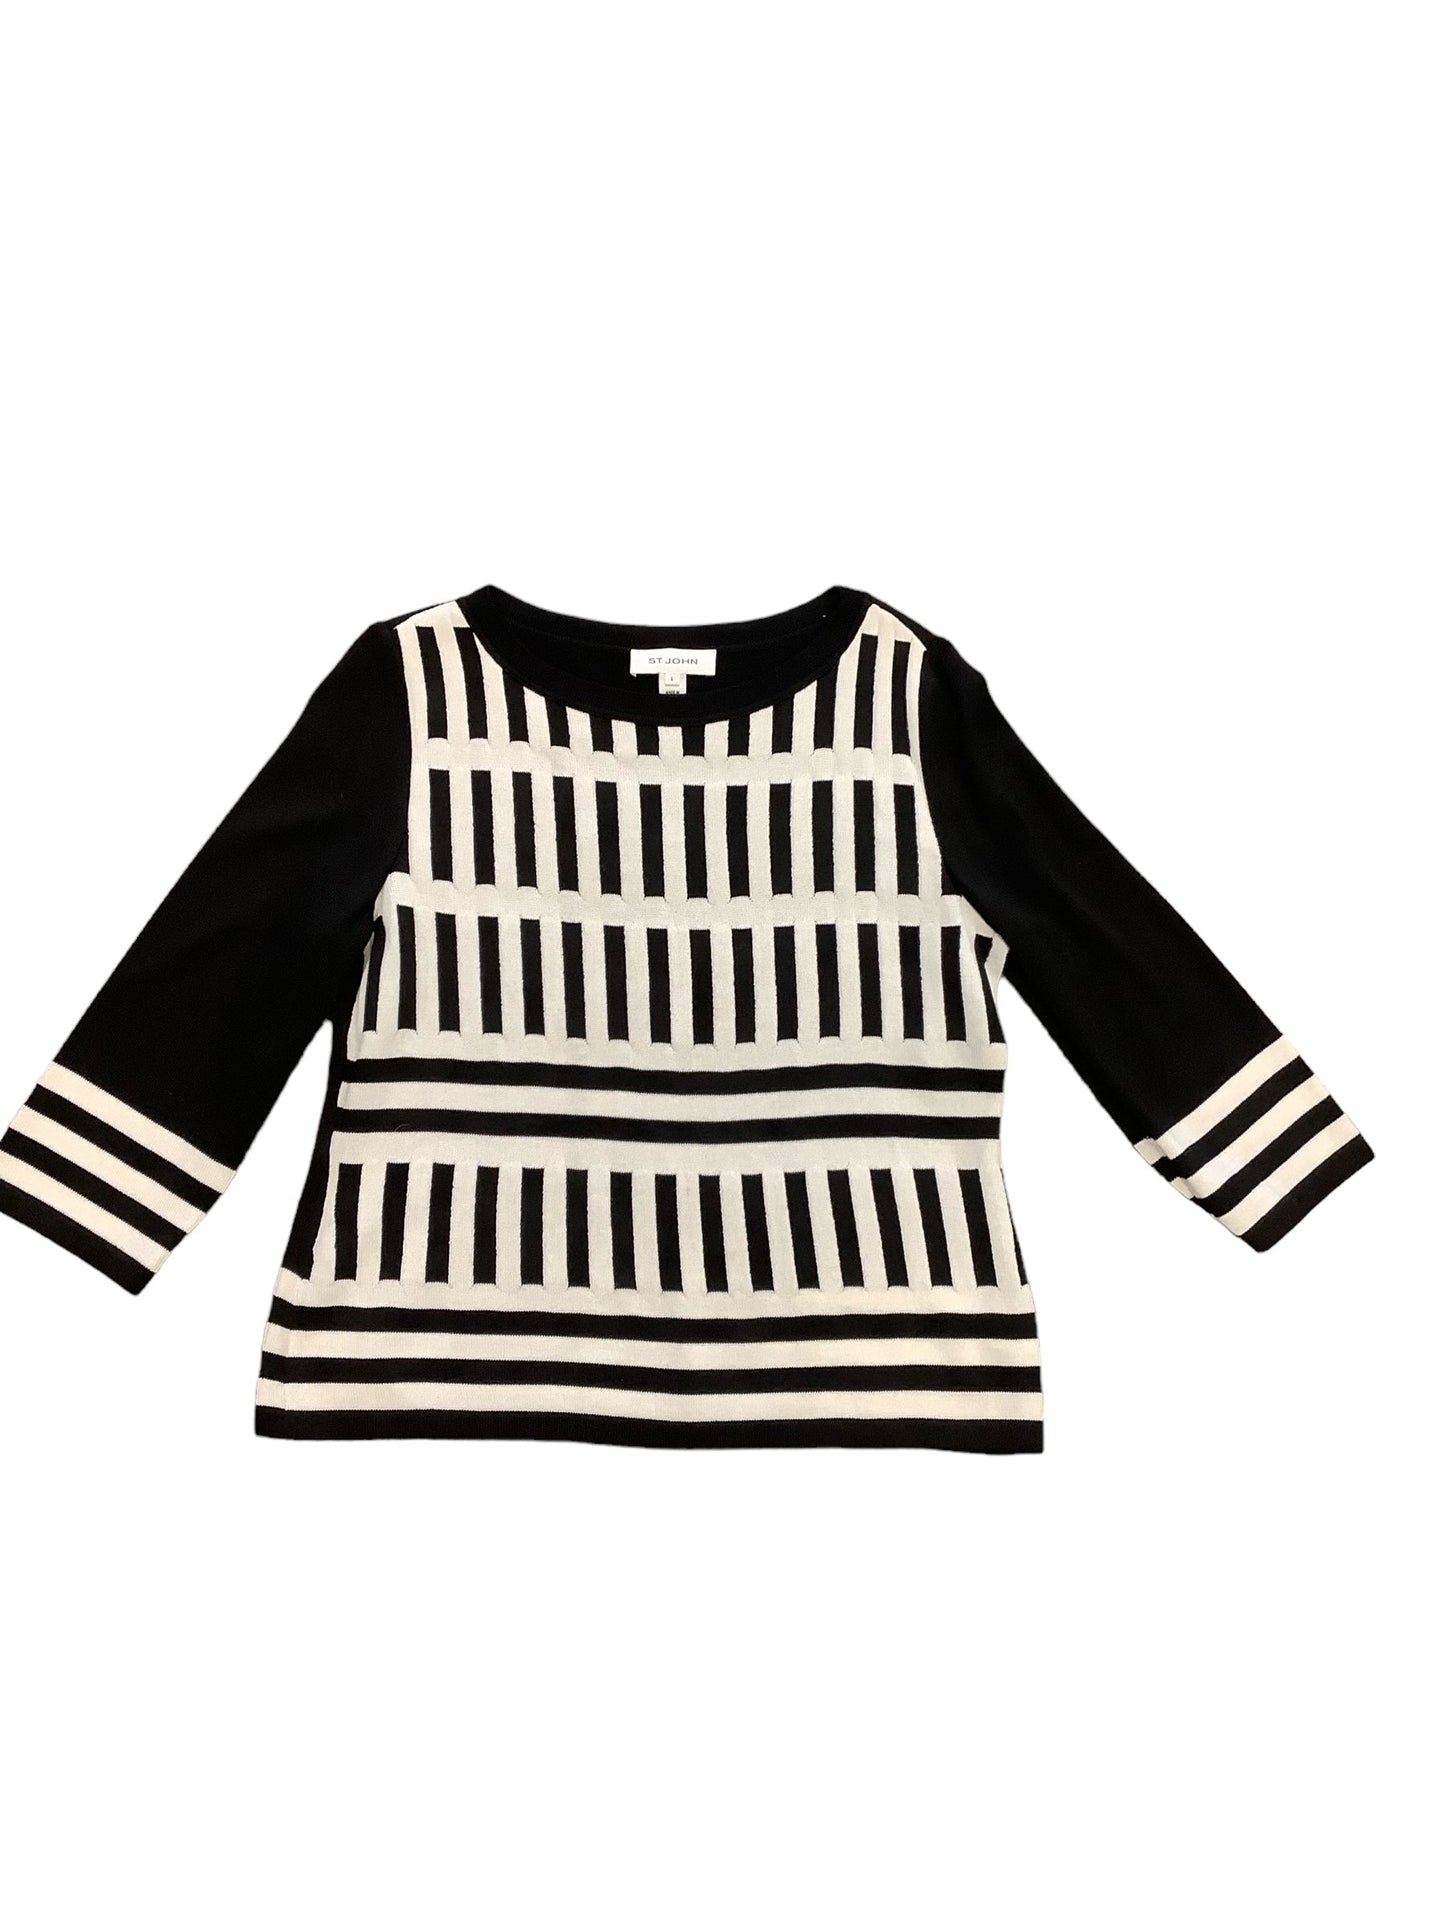 Black & White Sweater St John Knits, Size L